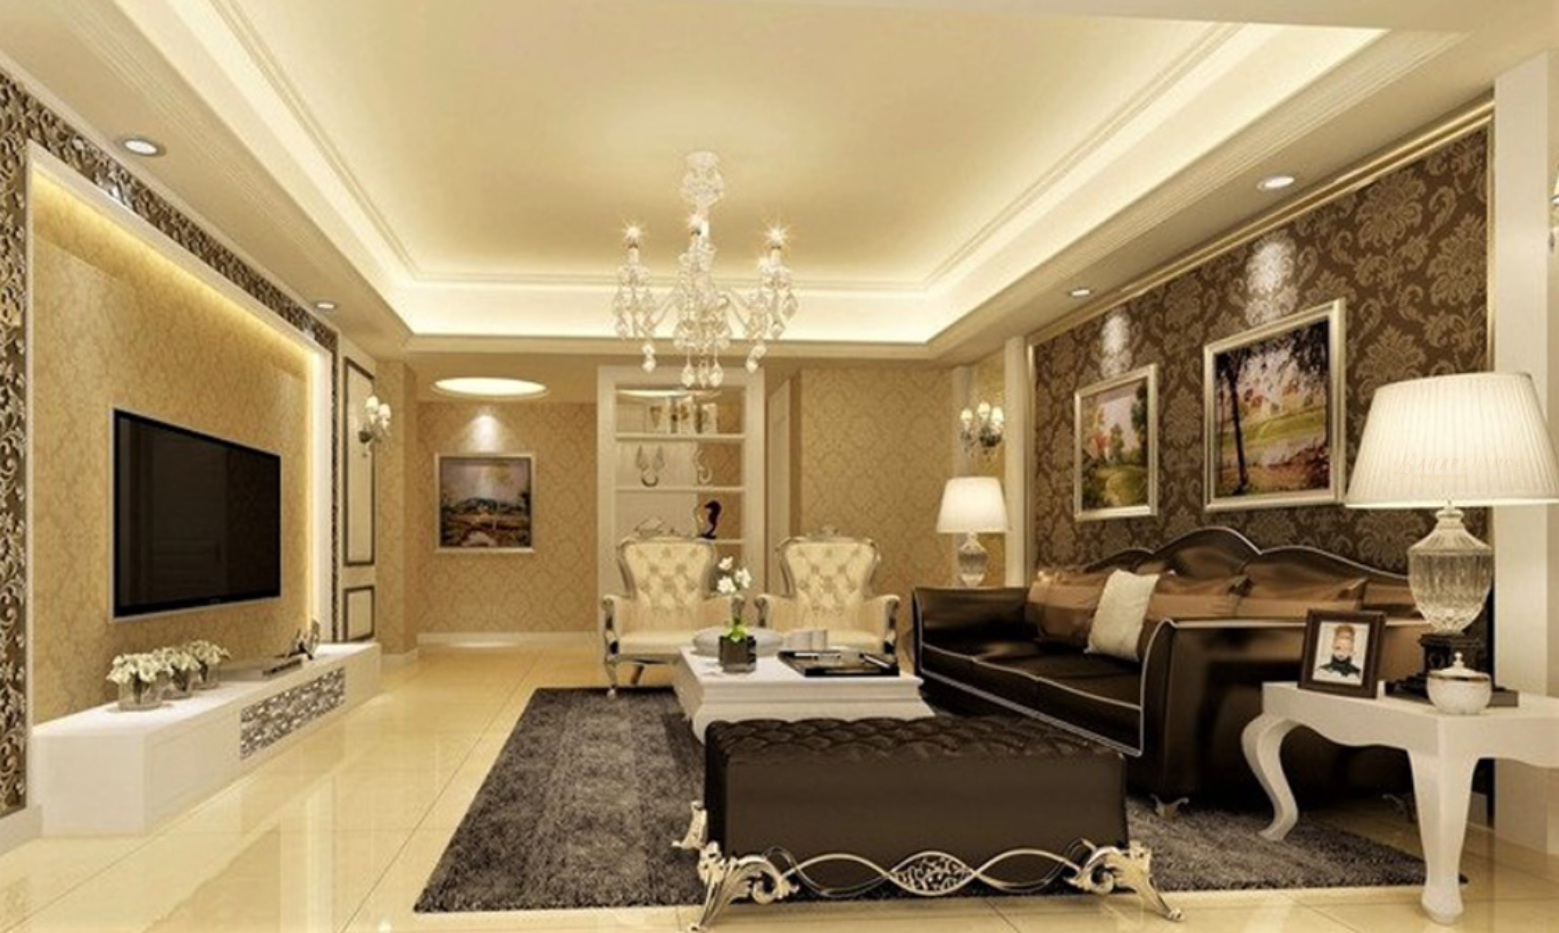 Elegant Home Decor Ideas: Explore into the Latest Stylish Home Decor.